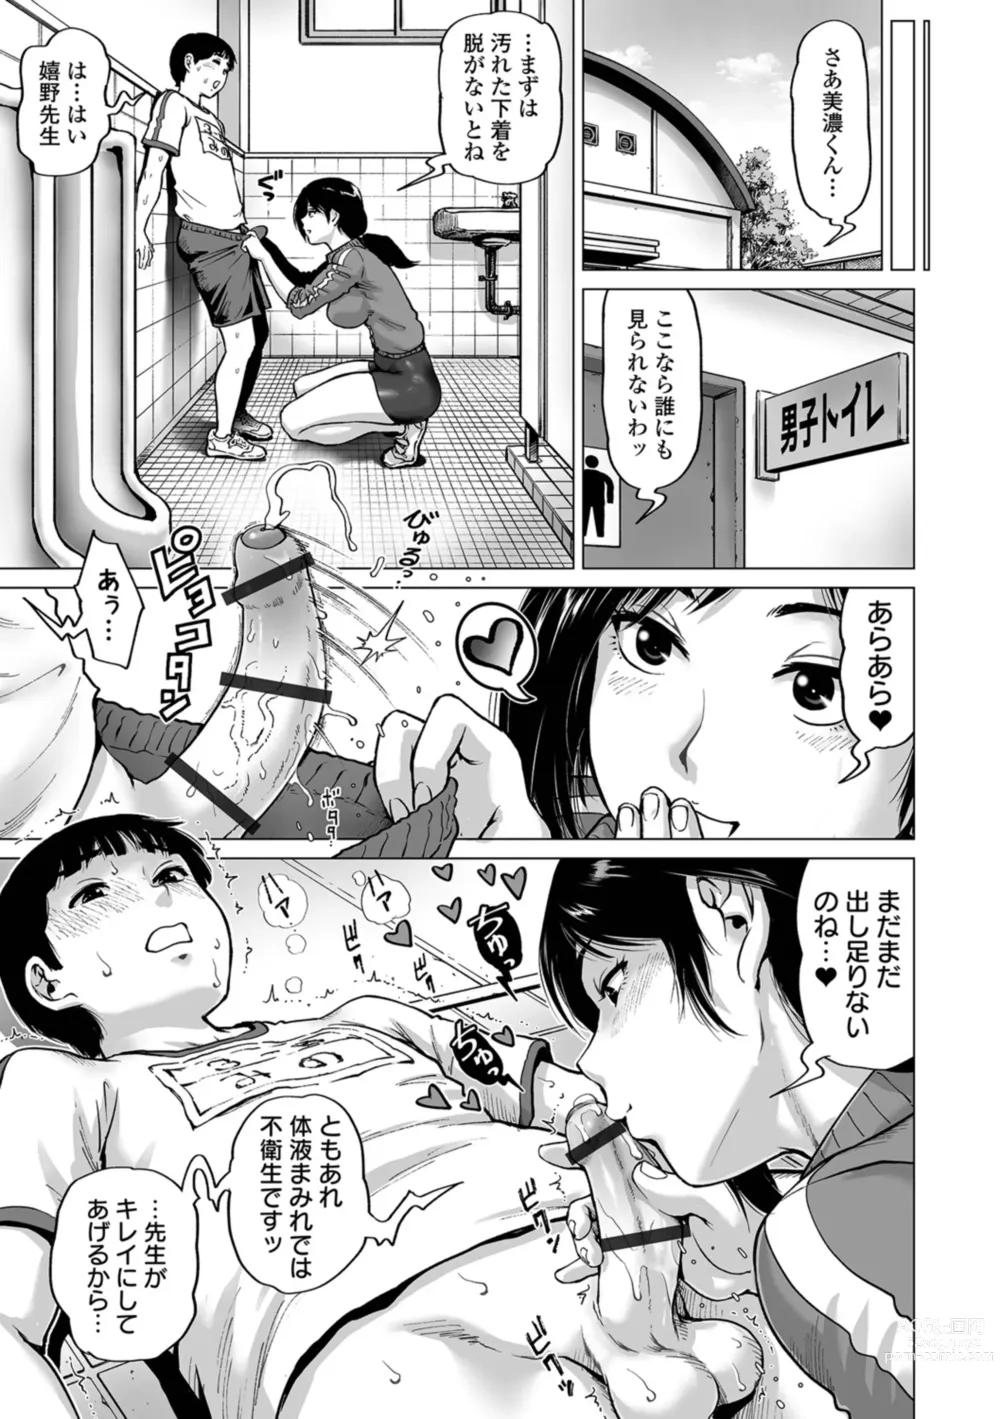 Page 9 of manga Harenchi Classmate